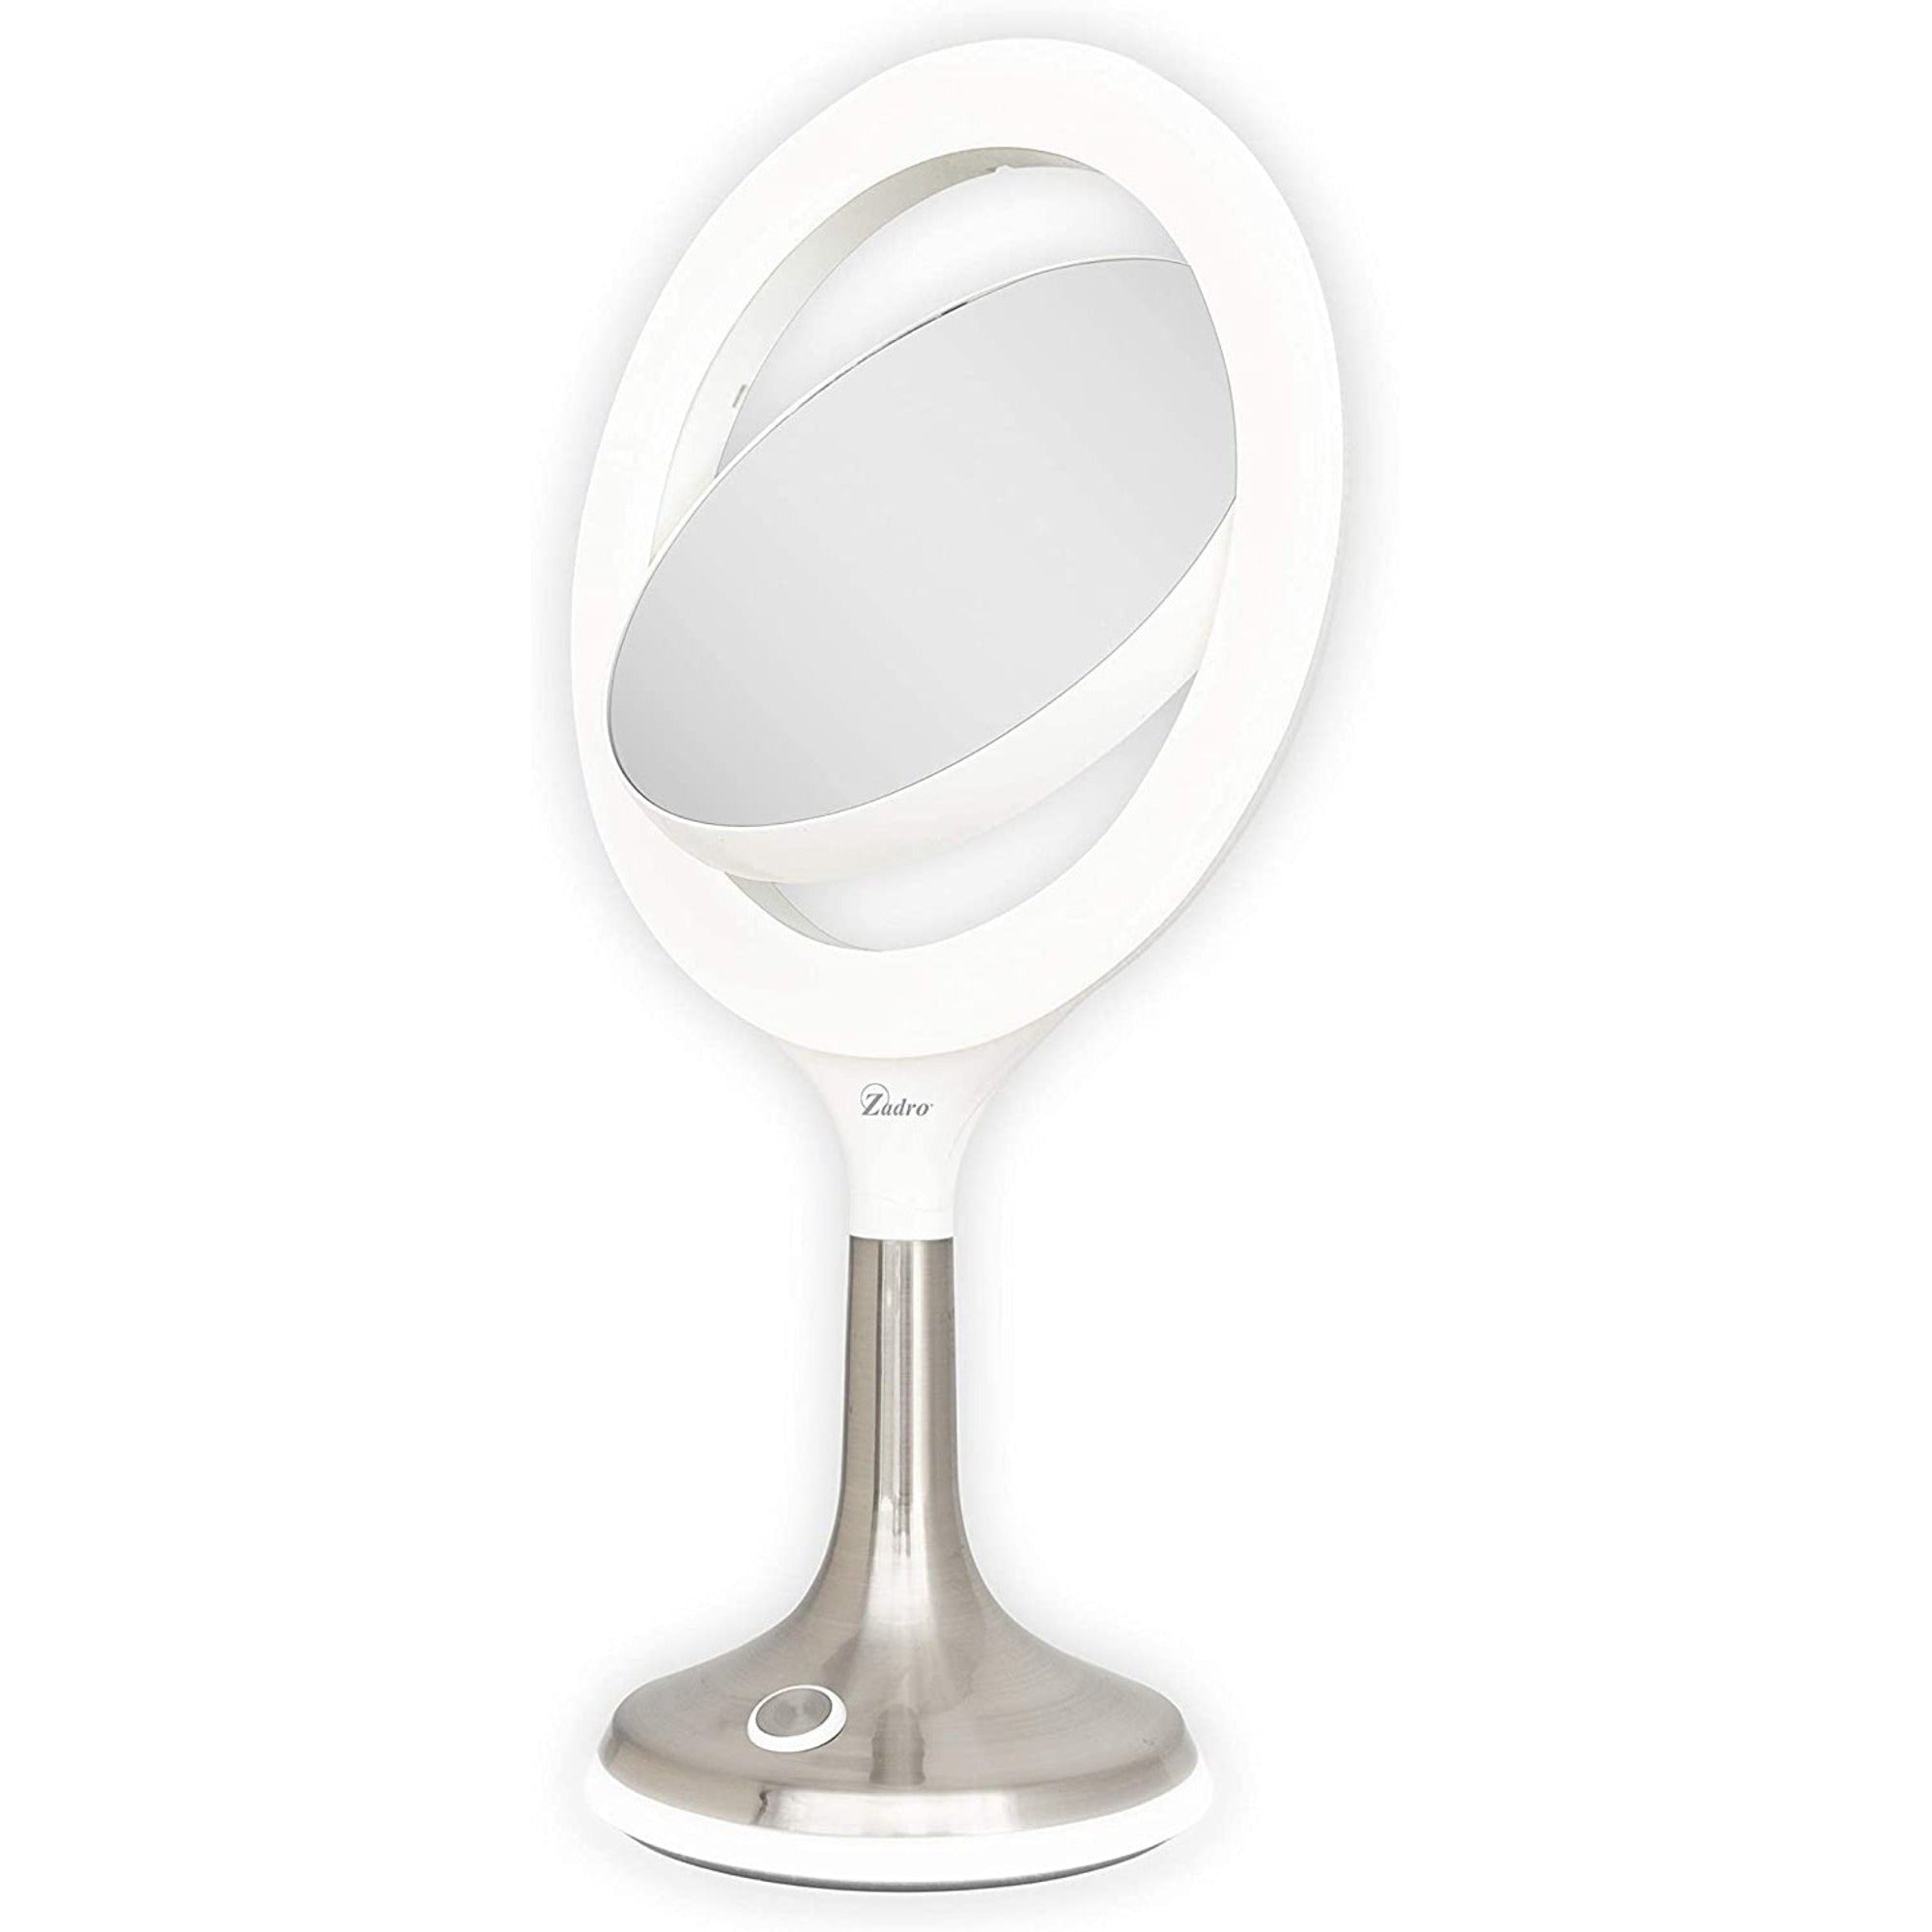 Zadro SOLANA 9.75" Round Ultra Bright Ring LED Vanity Mirror 8X/1X / SATIN NICKEL